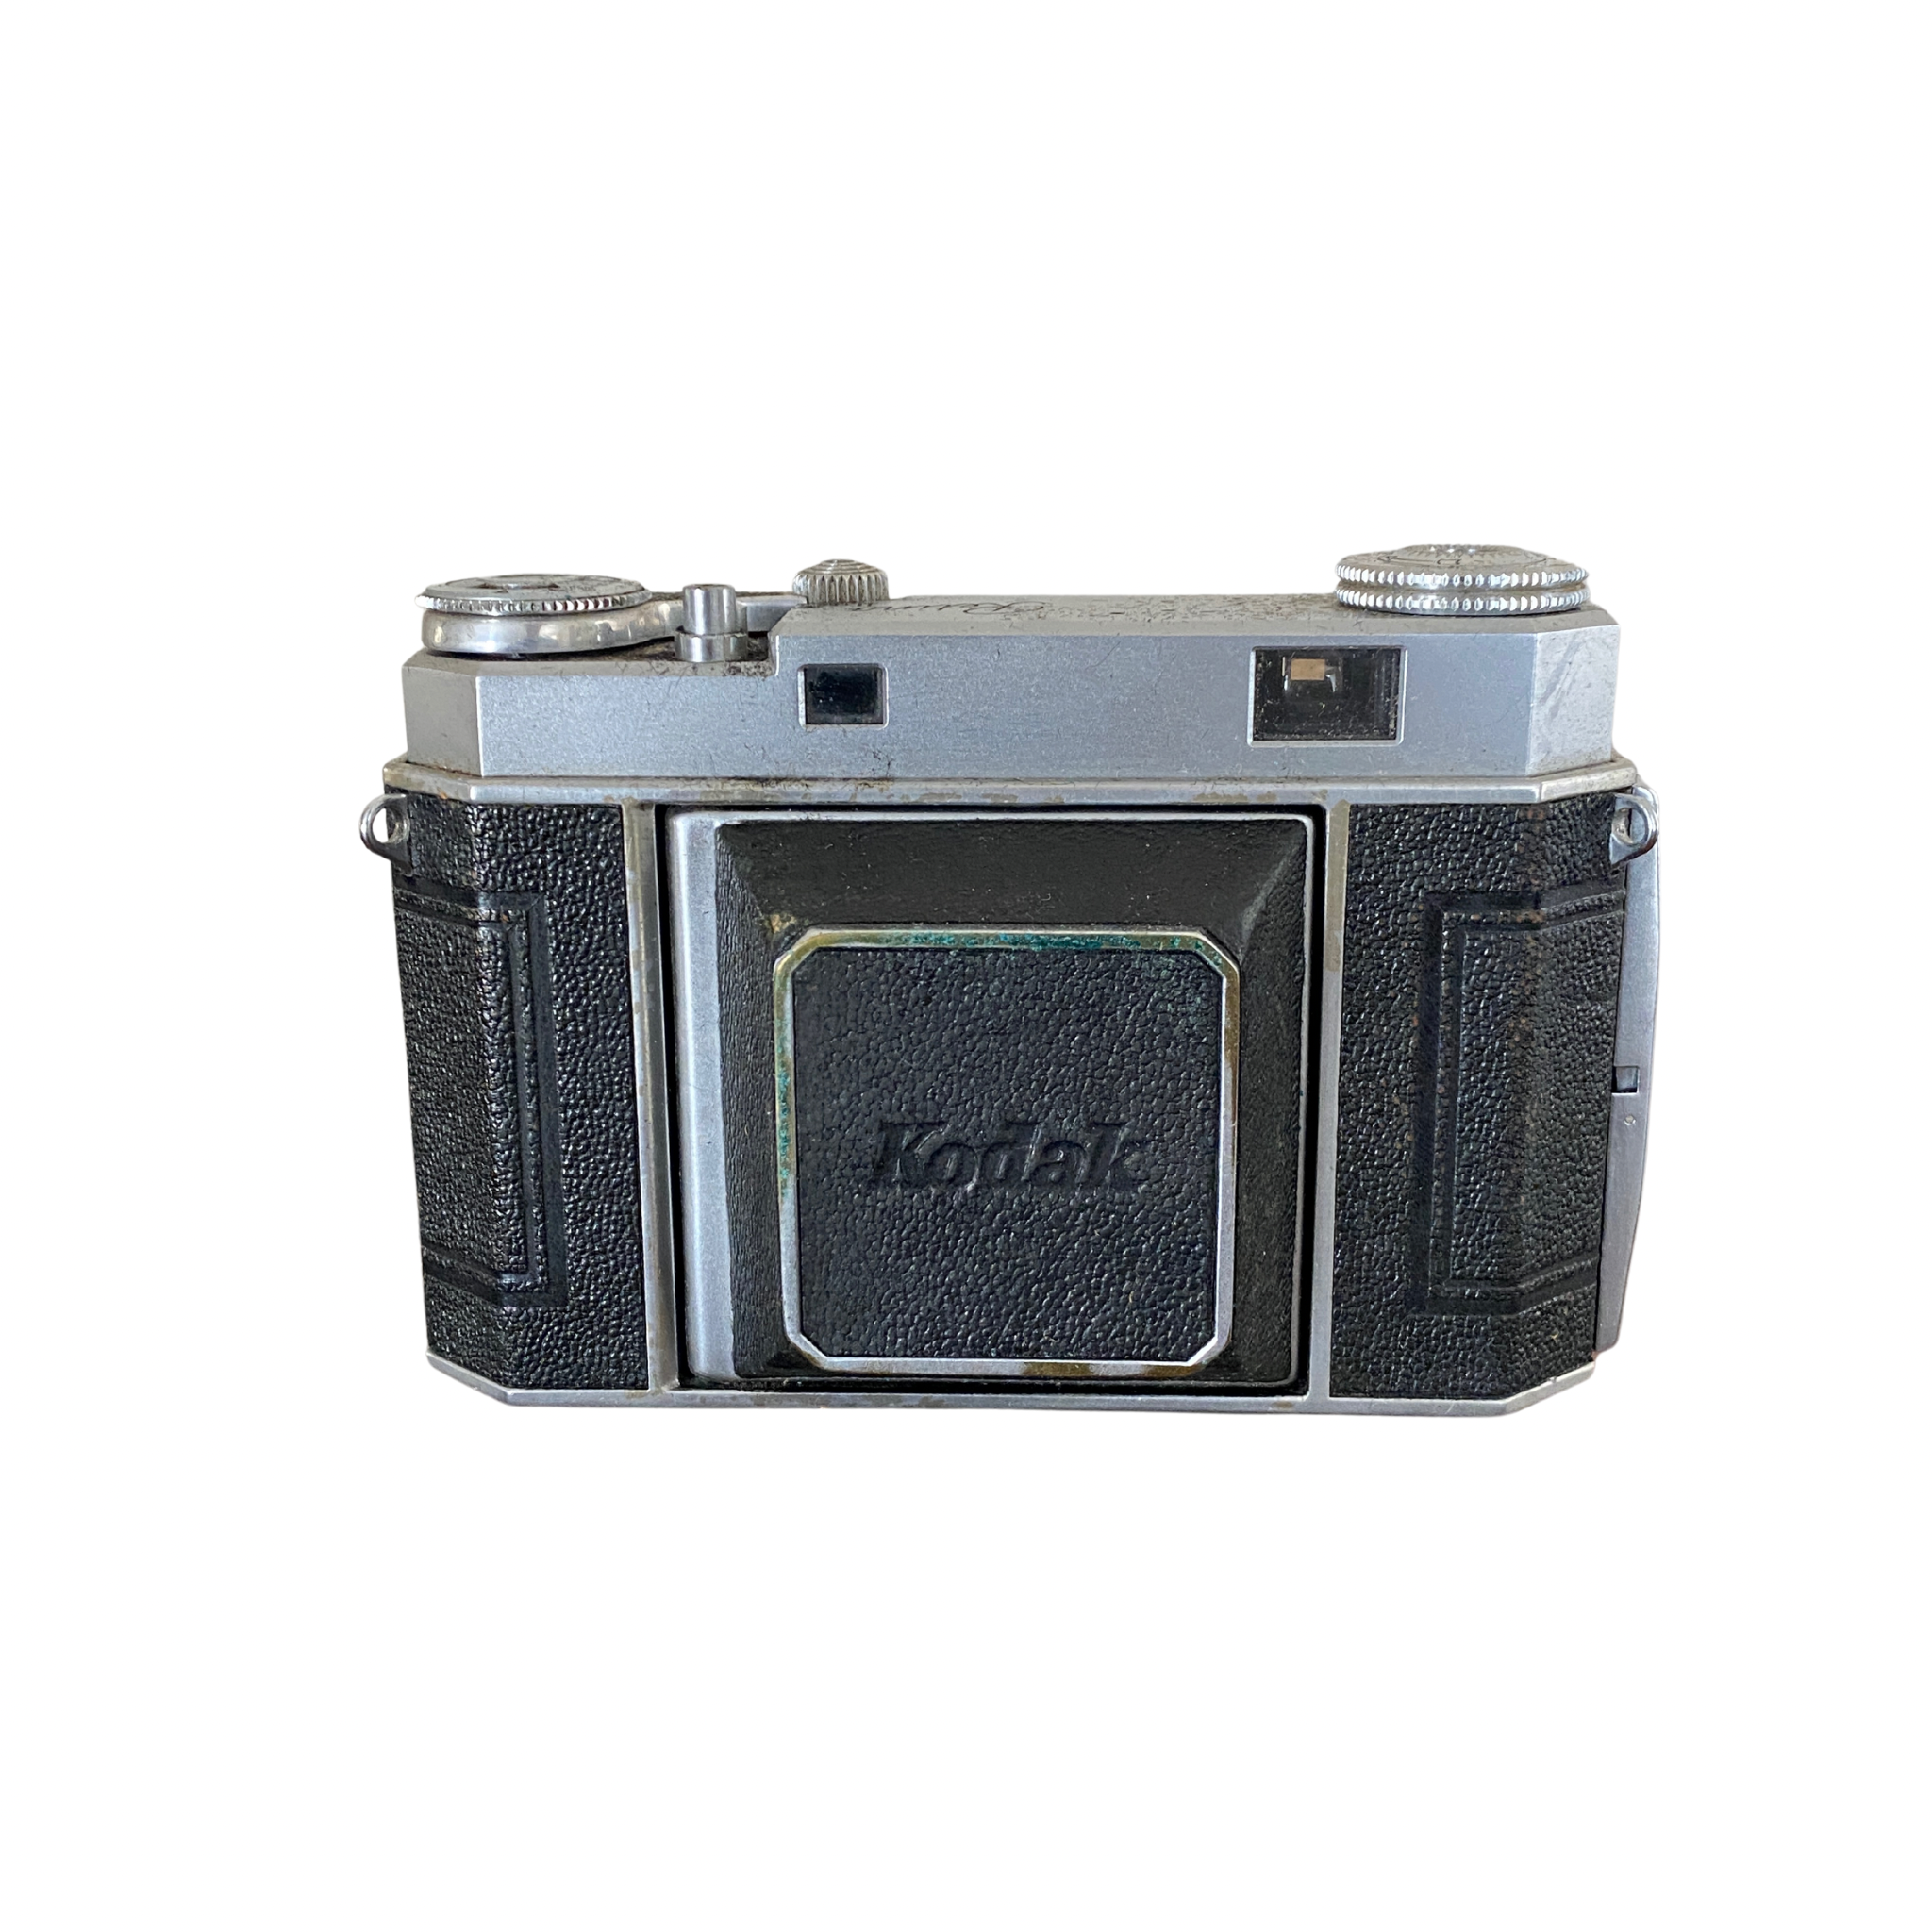 Vintage Kodak Retina 11a camera